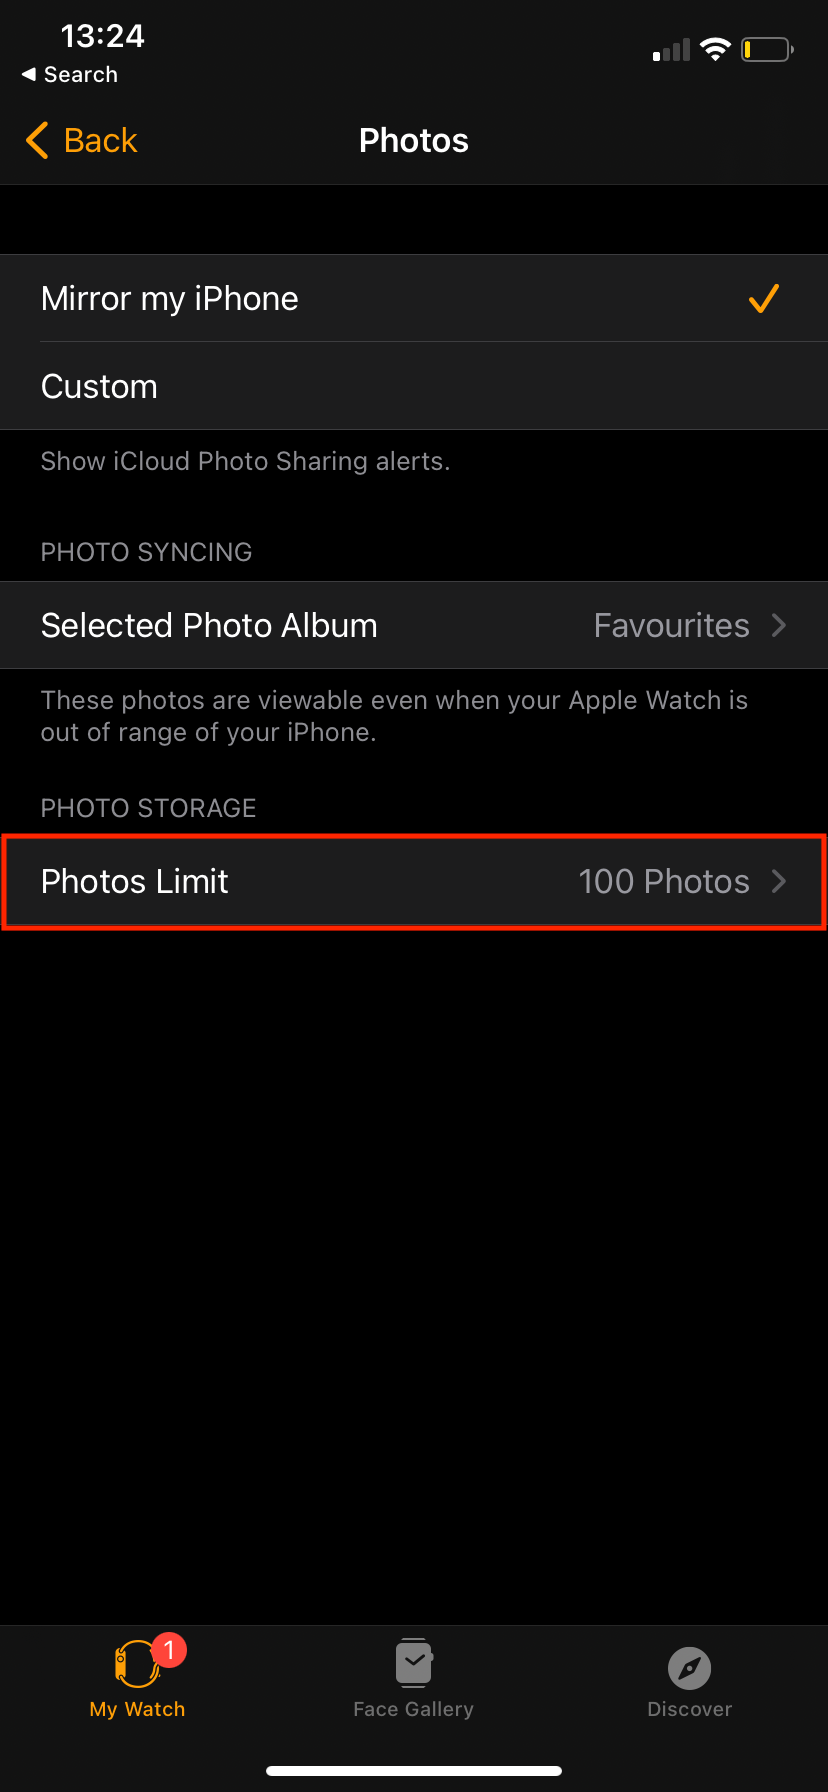 photos limit on Apple Watch